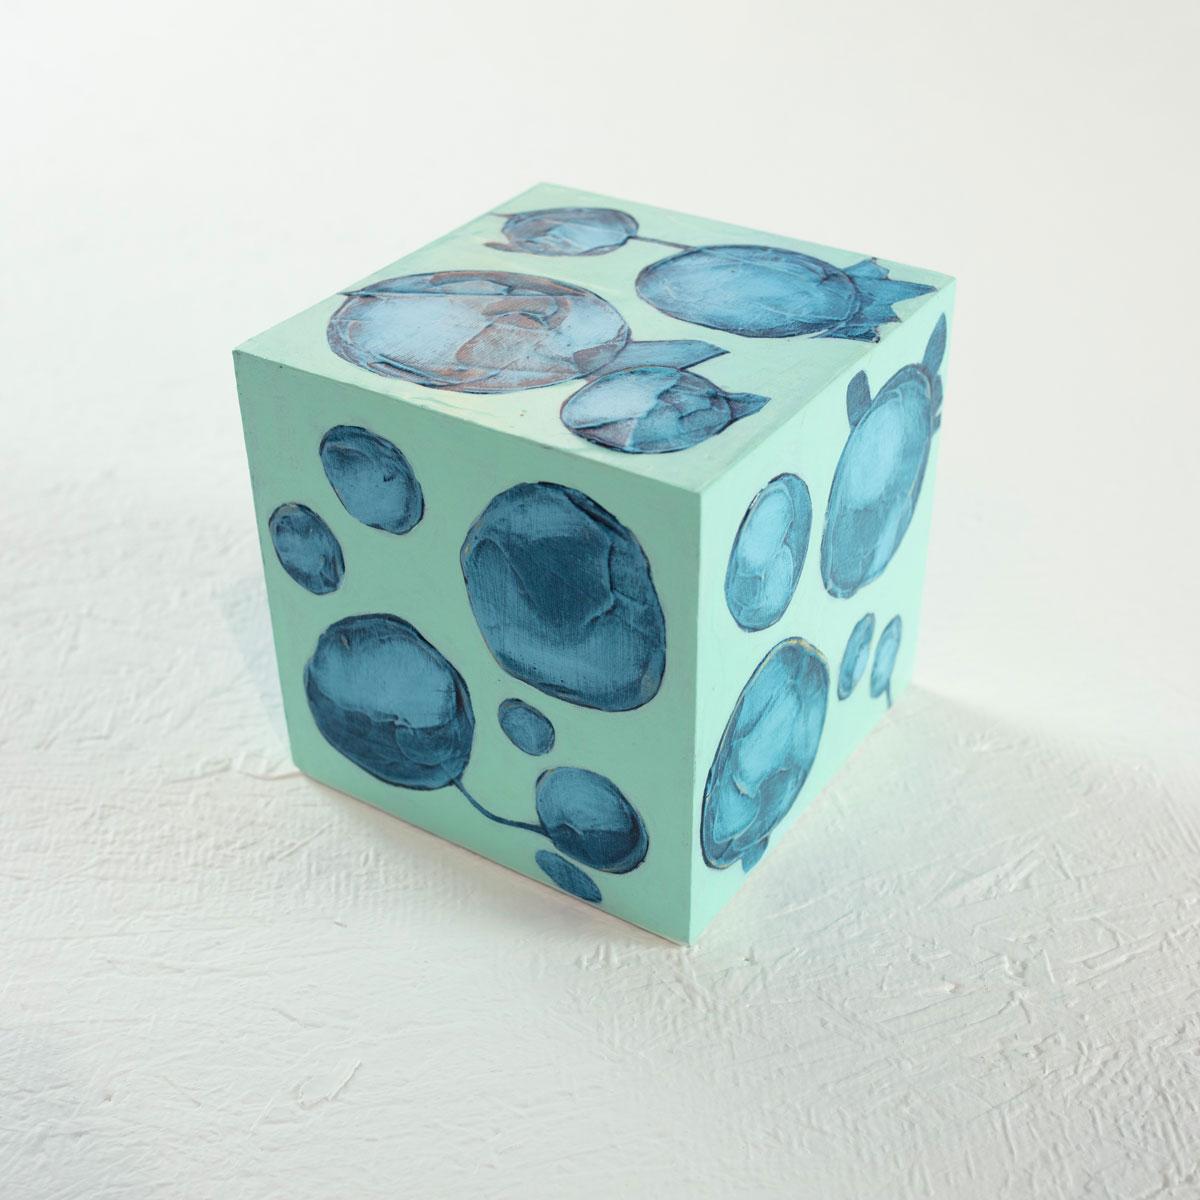 "Little Swann 10" Painted Wooden Cube Sculpture